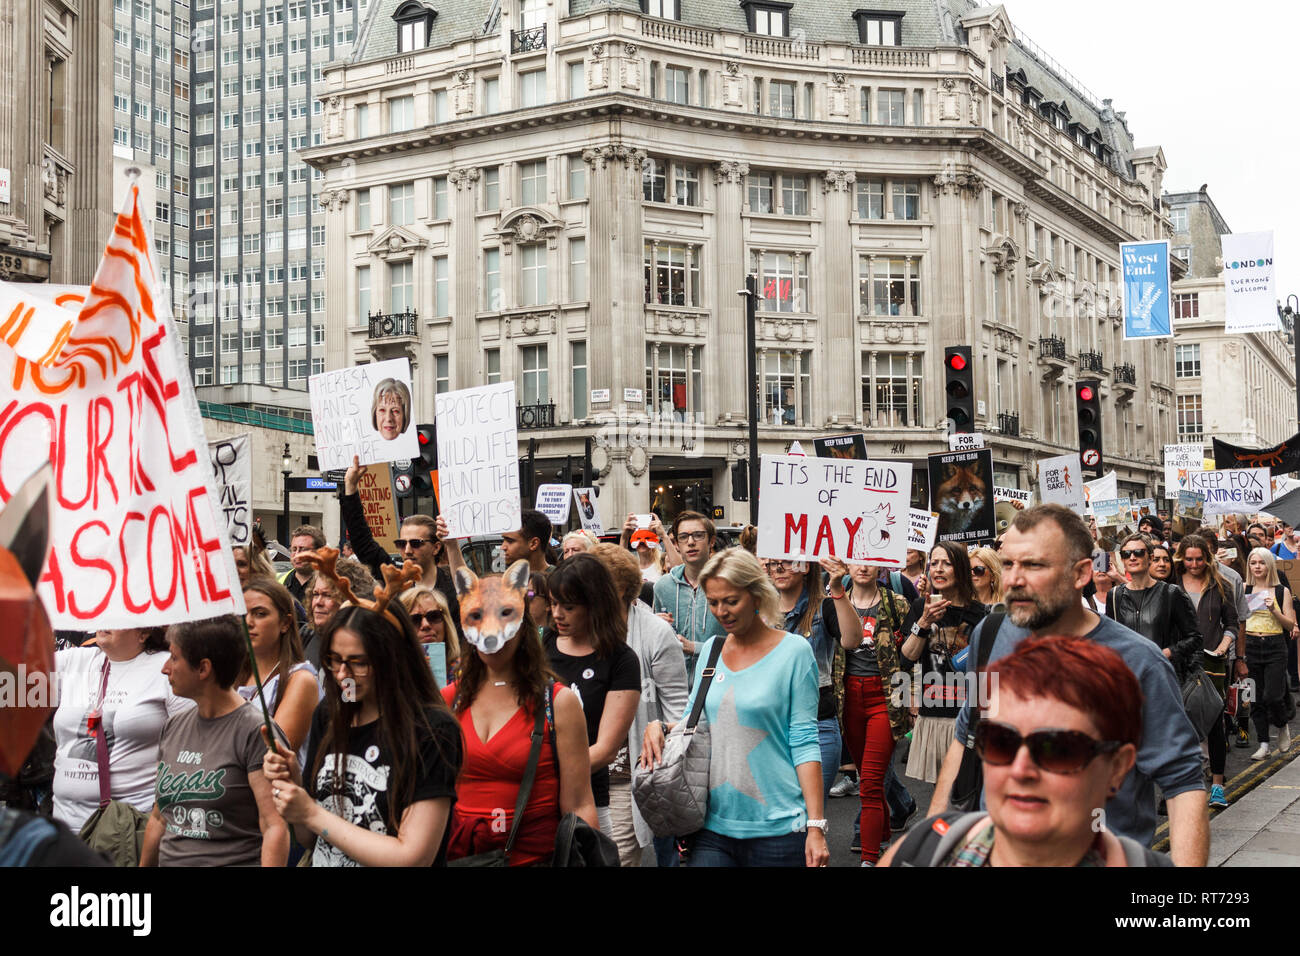 London, England - 29. Mai 2017: Tierschützer auf Demonstration gegen fow Jagd in London Stockfoto